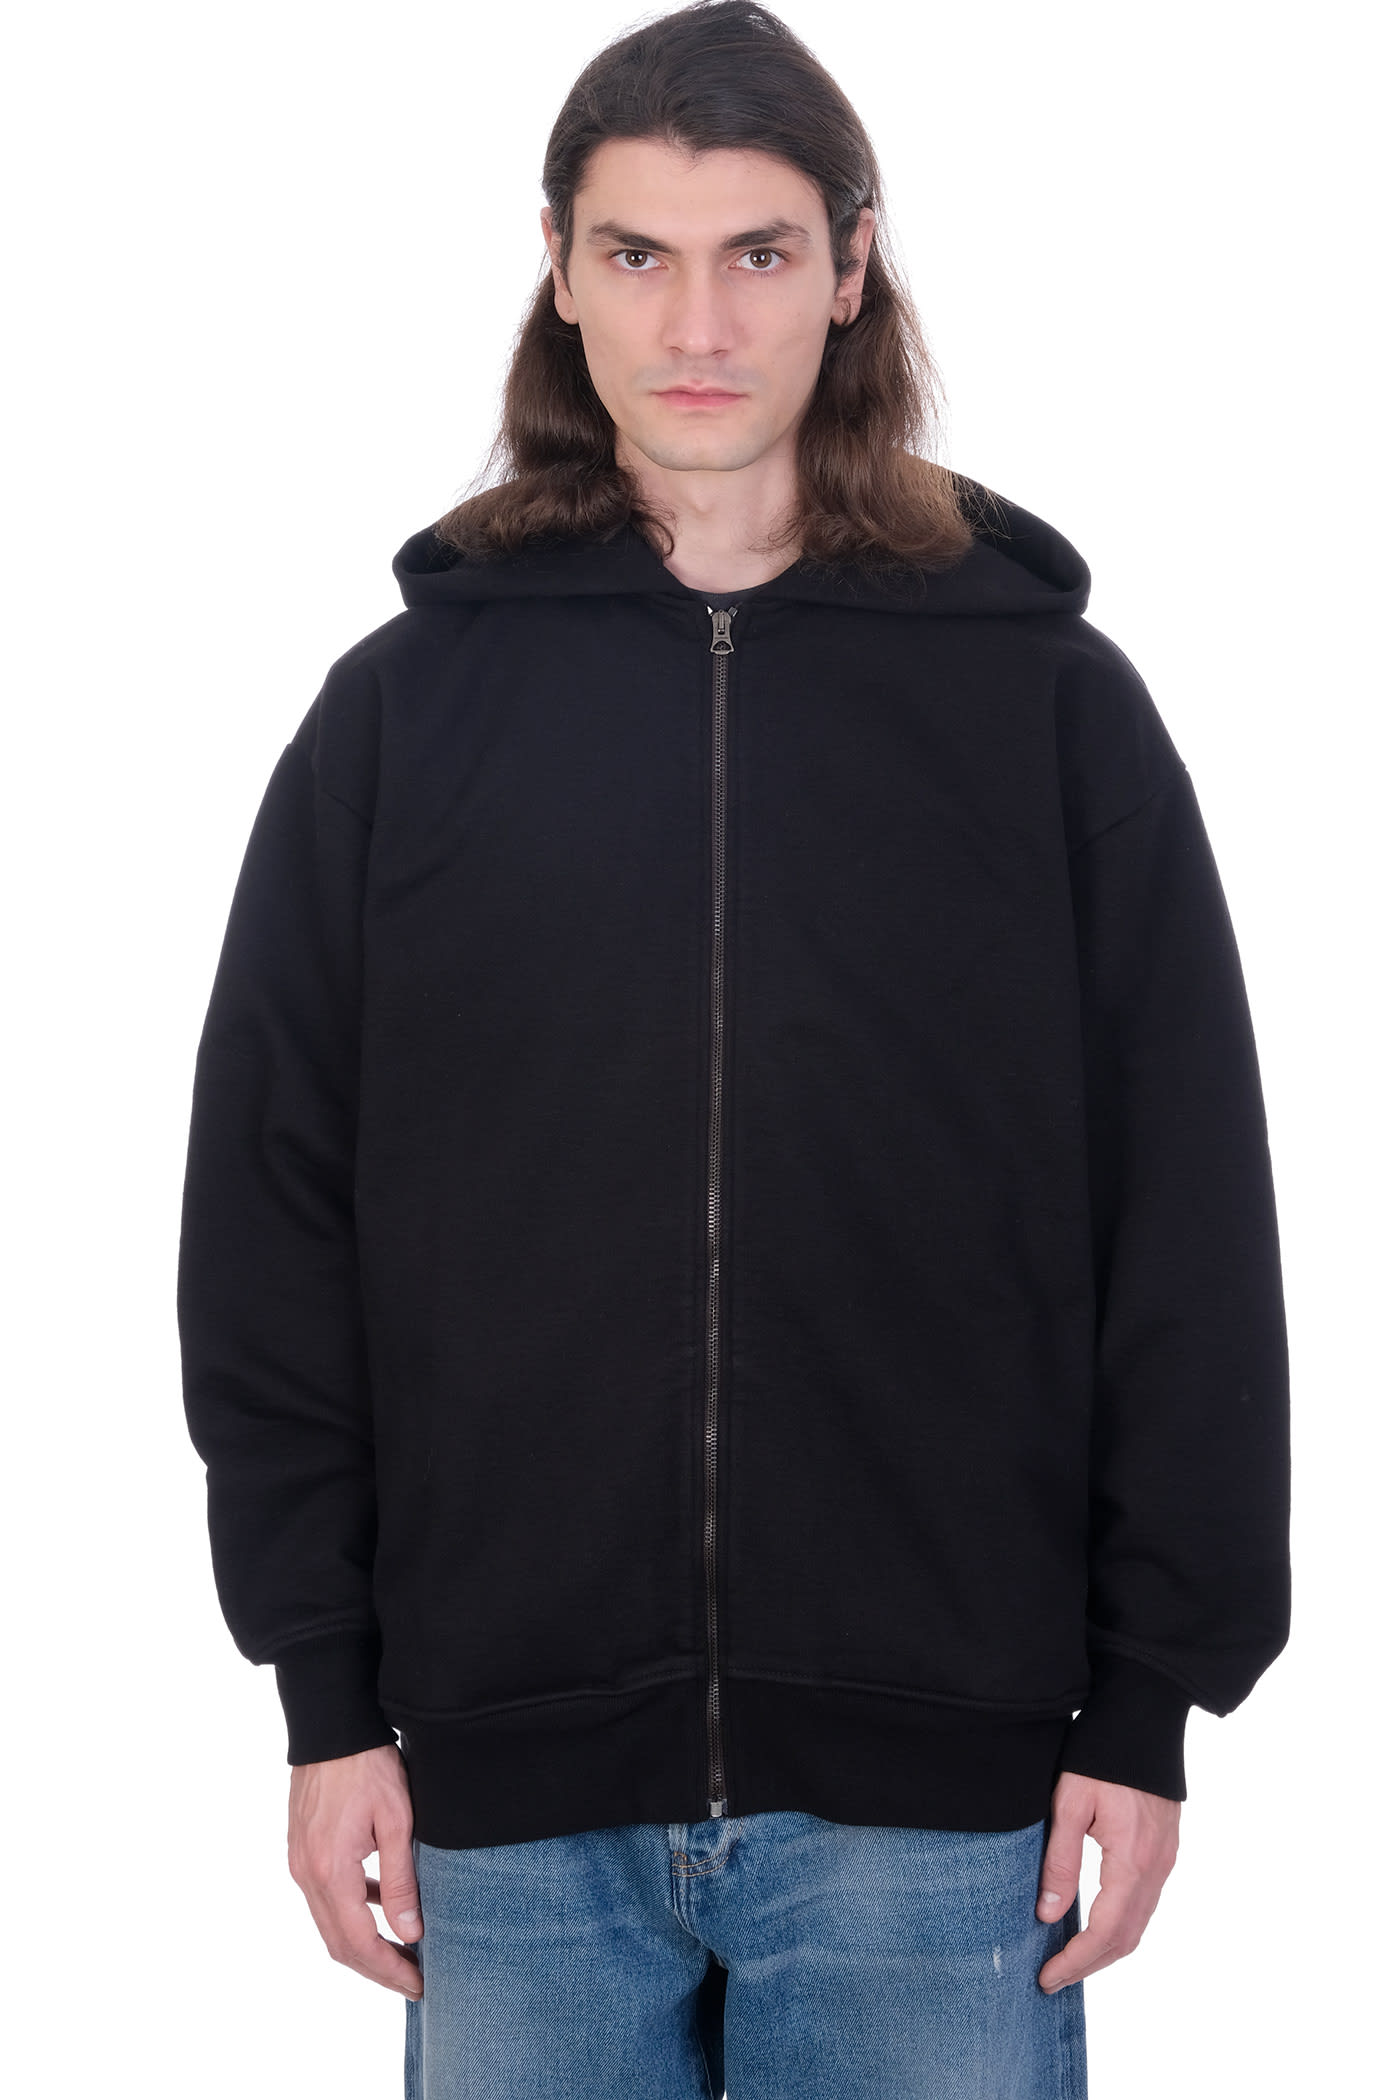 Acne Studios Forban Sweatshirt In Black Cotton